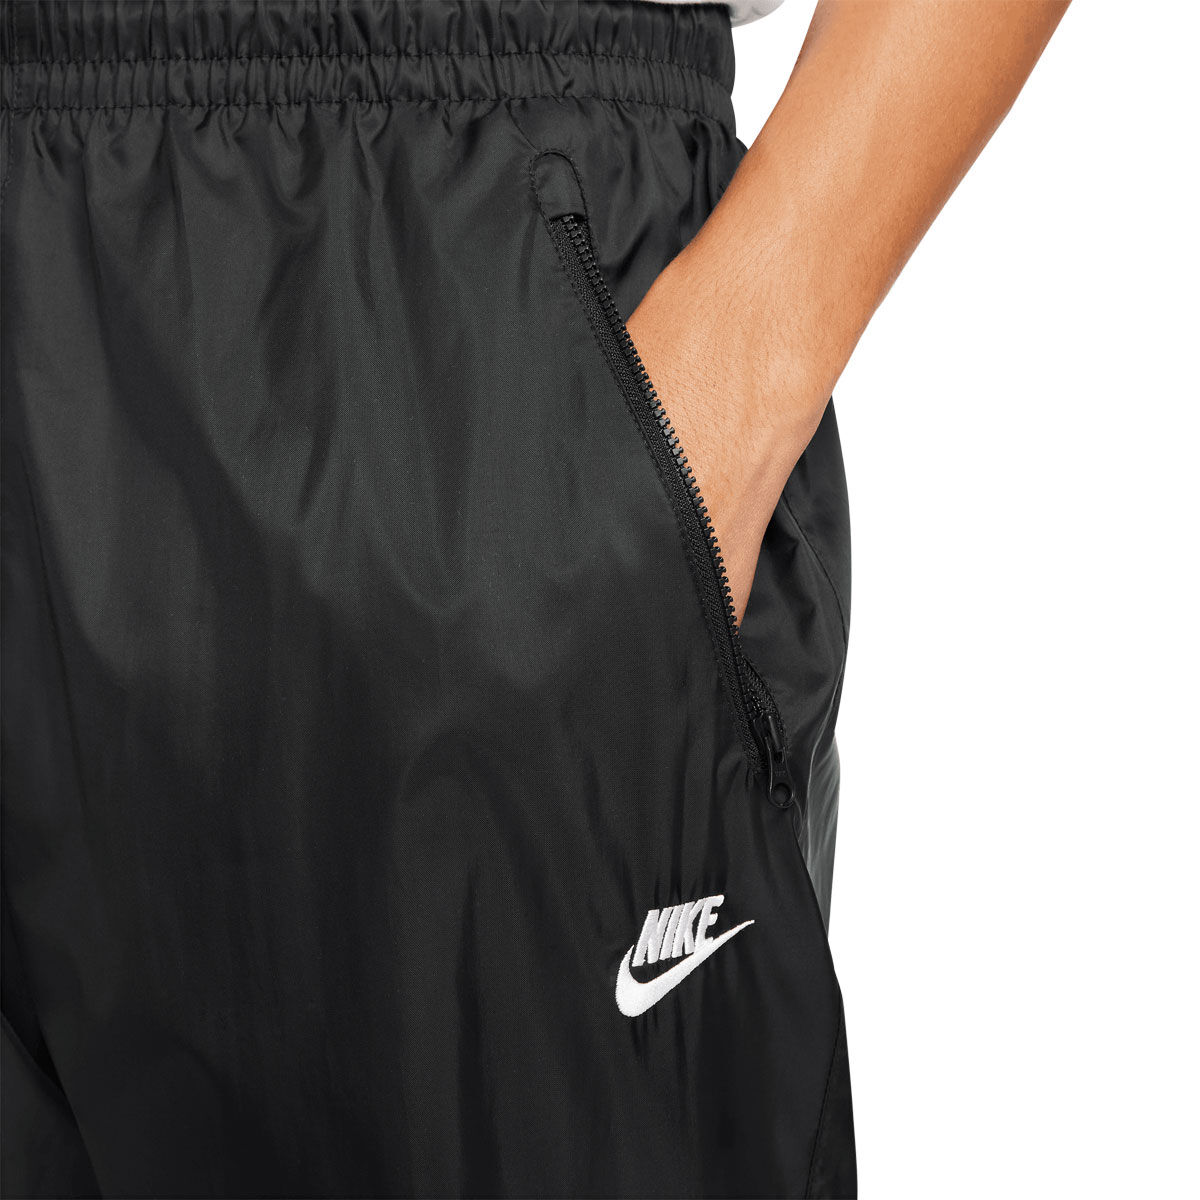 Nike Track Pants Mens L Jet Black Sweatpants White Swoosh Baggy Fit Mesh  Lined  eBay